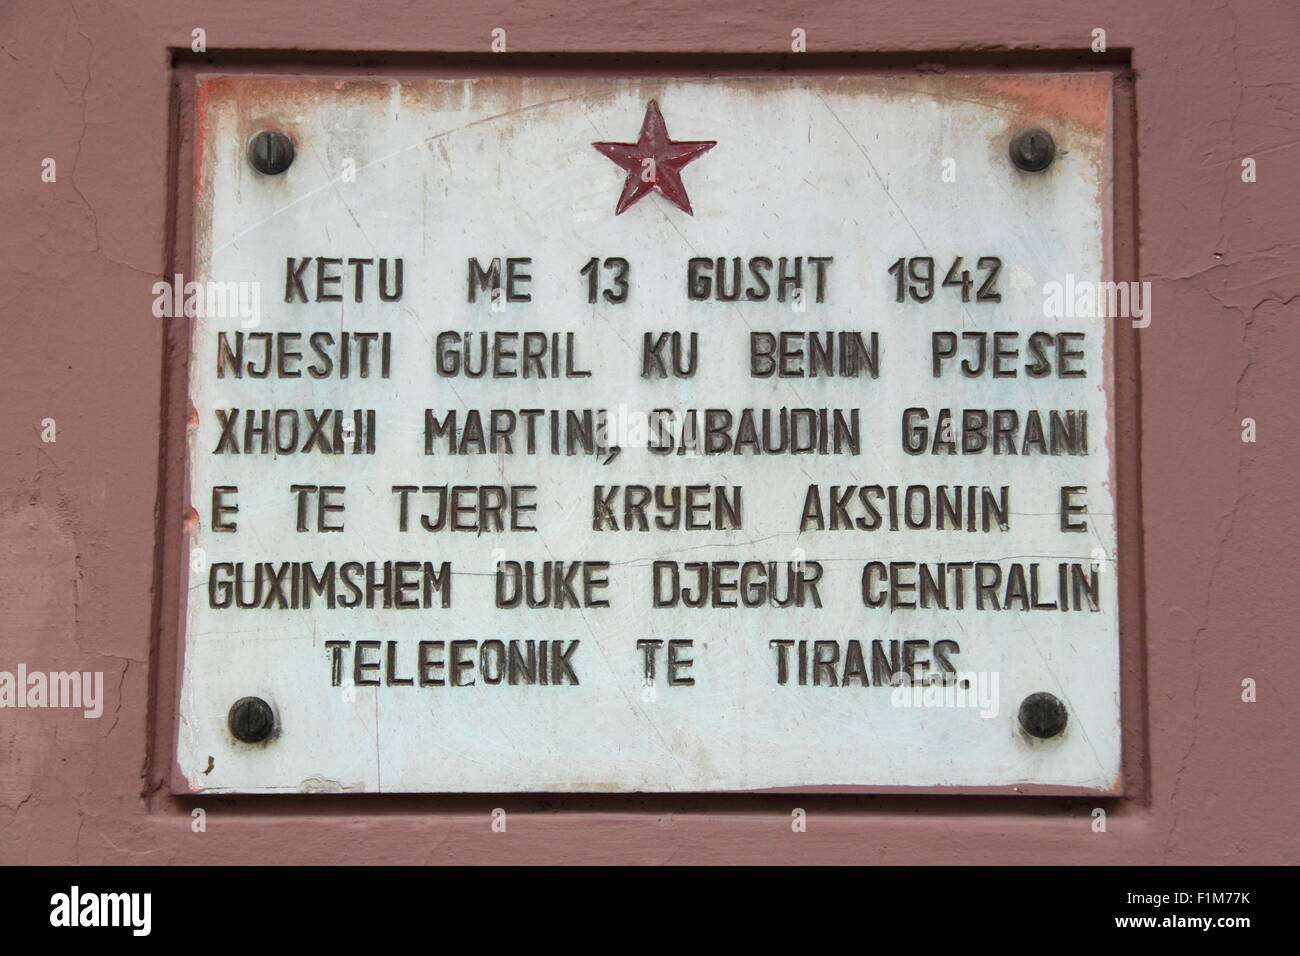 Memorial to WW2 partisans Xhoxhi Martini, Sabaudin Gabrani and others, Rruga Xhoxhi Martini, Tirana, Albania, Balkans, Europe Stock Photo